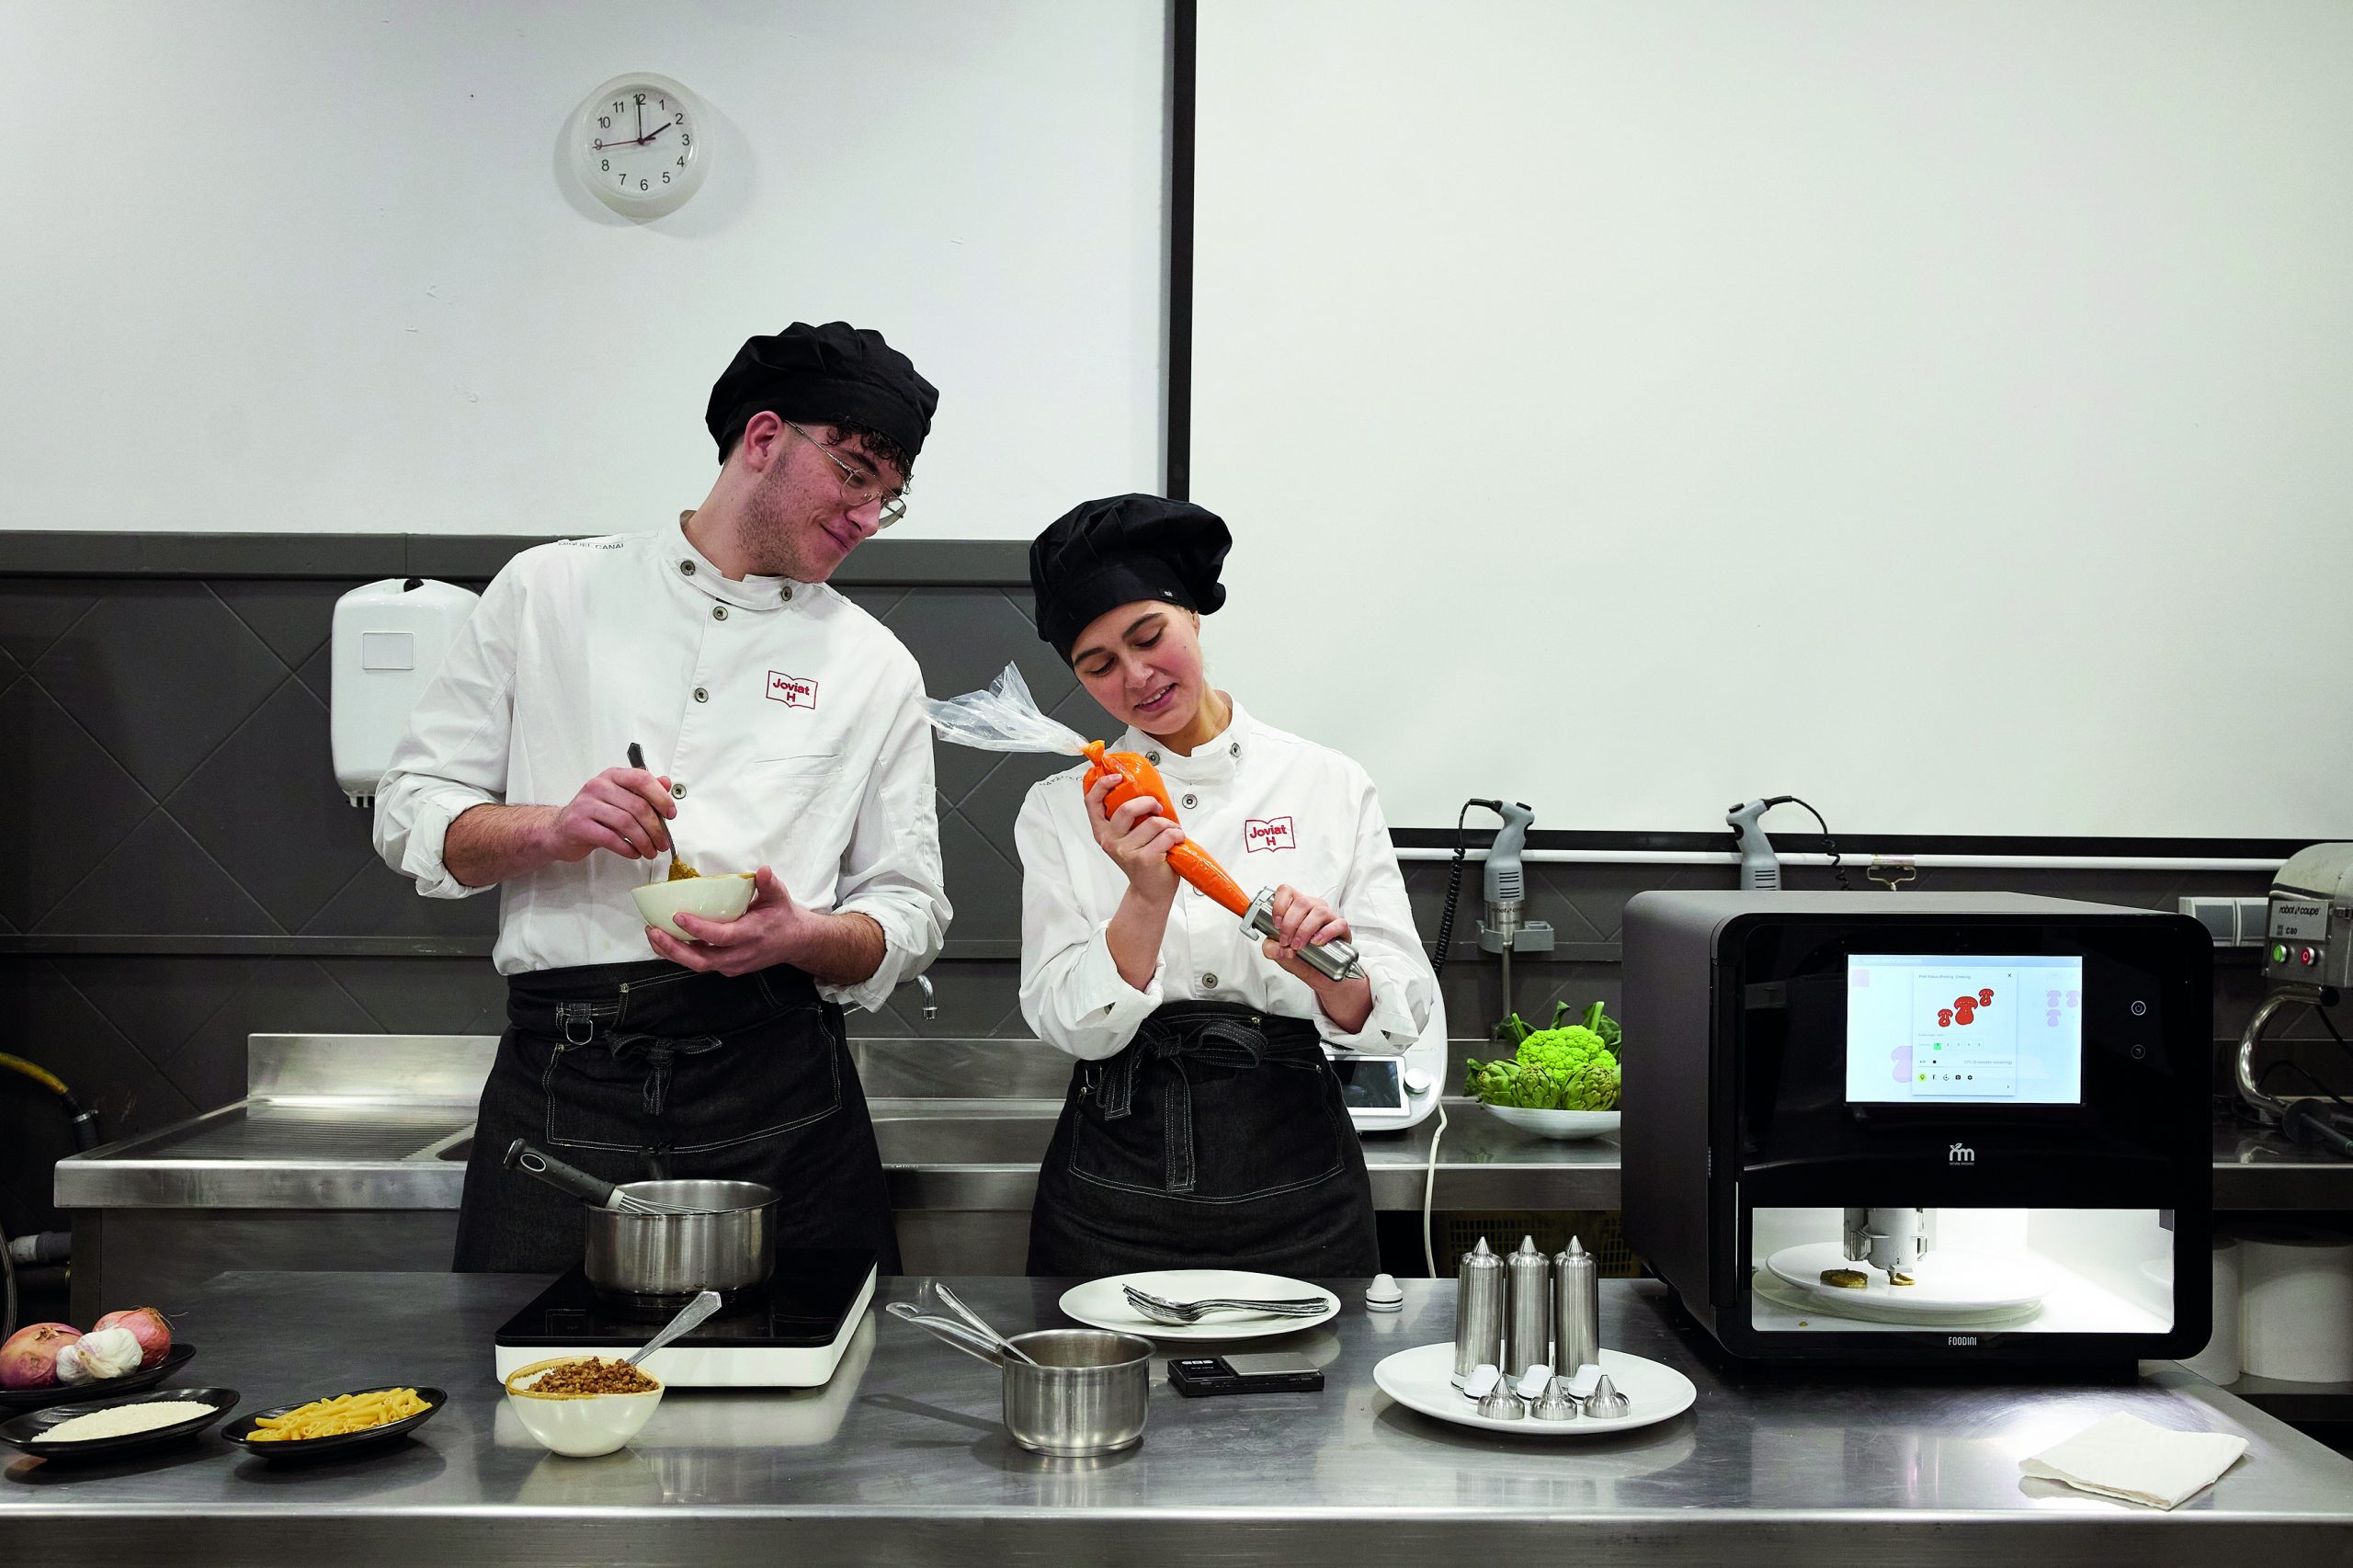 Dos estudiantes experimentand con la impresora 3D de comida